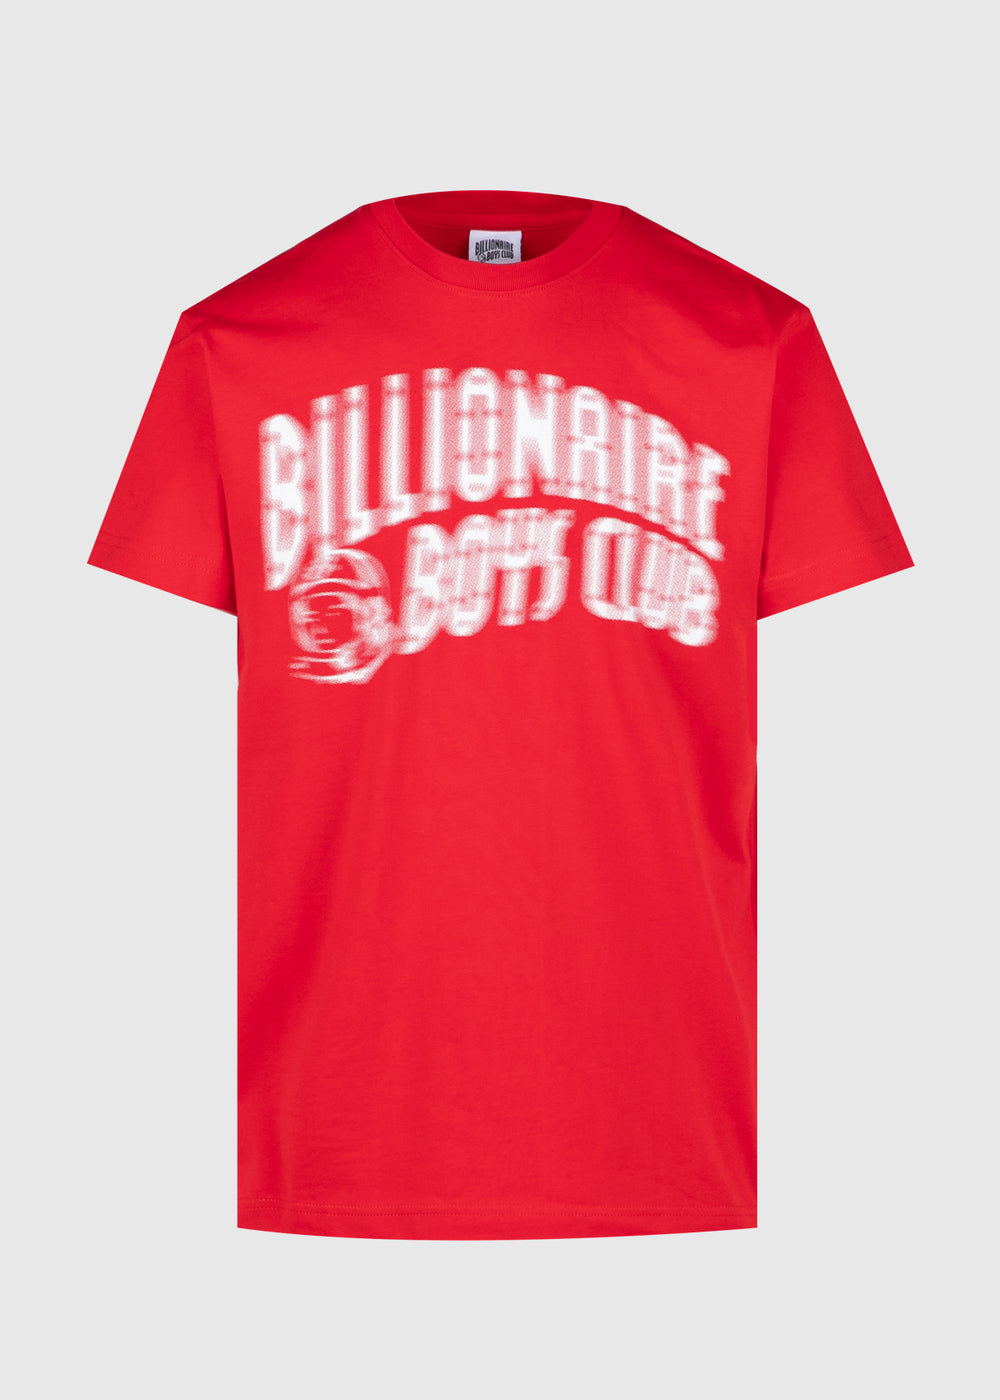 billionaire boys club red t shirt